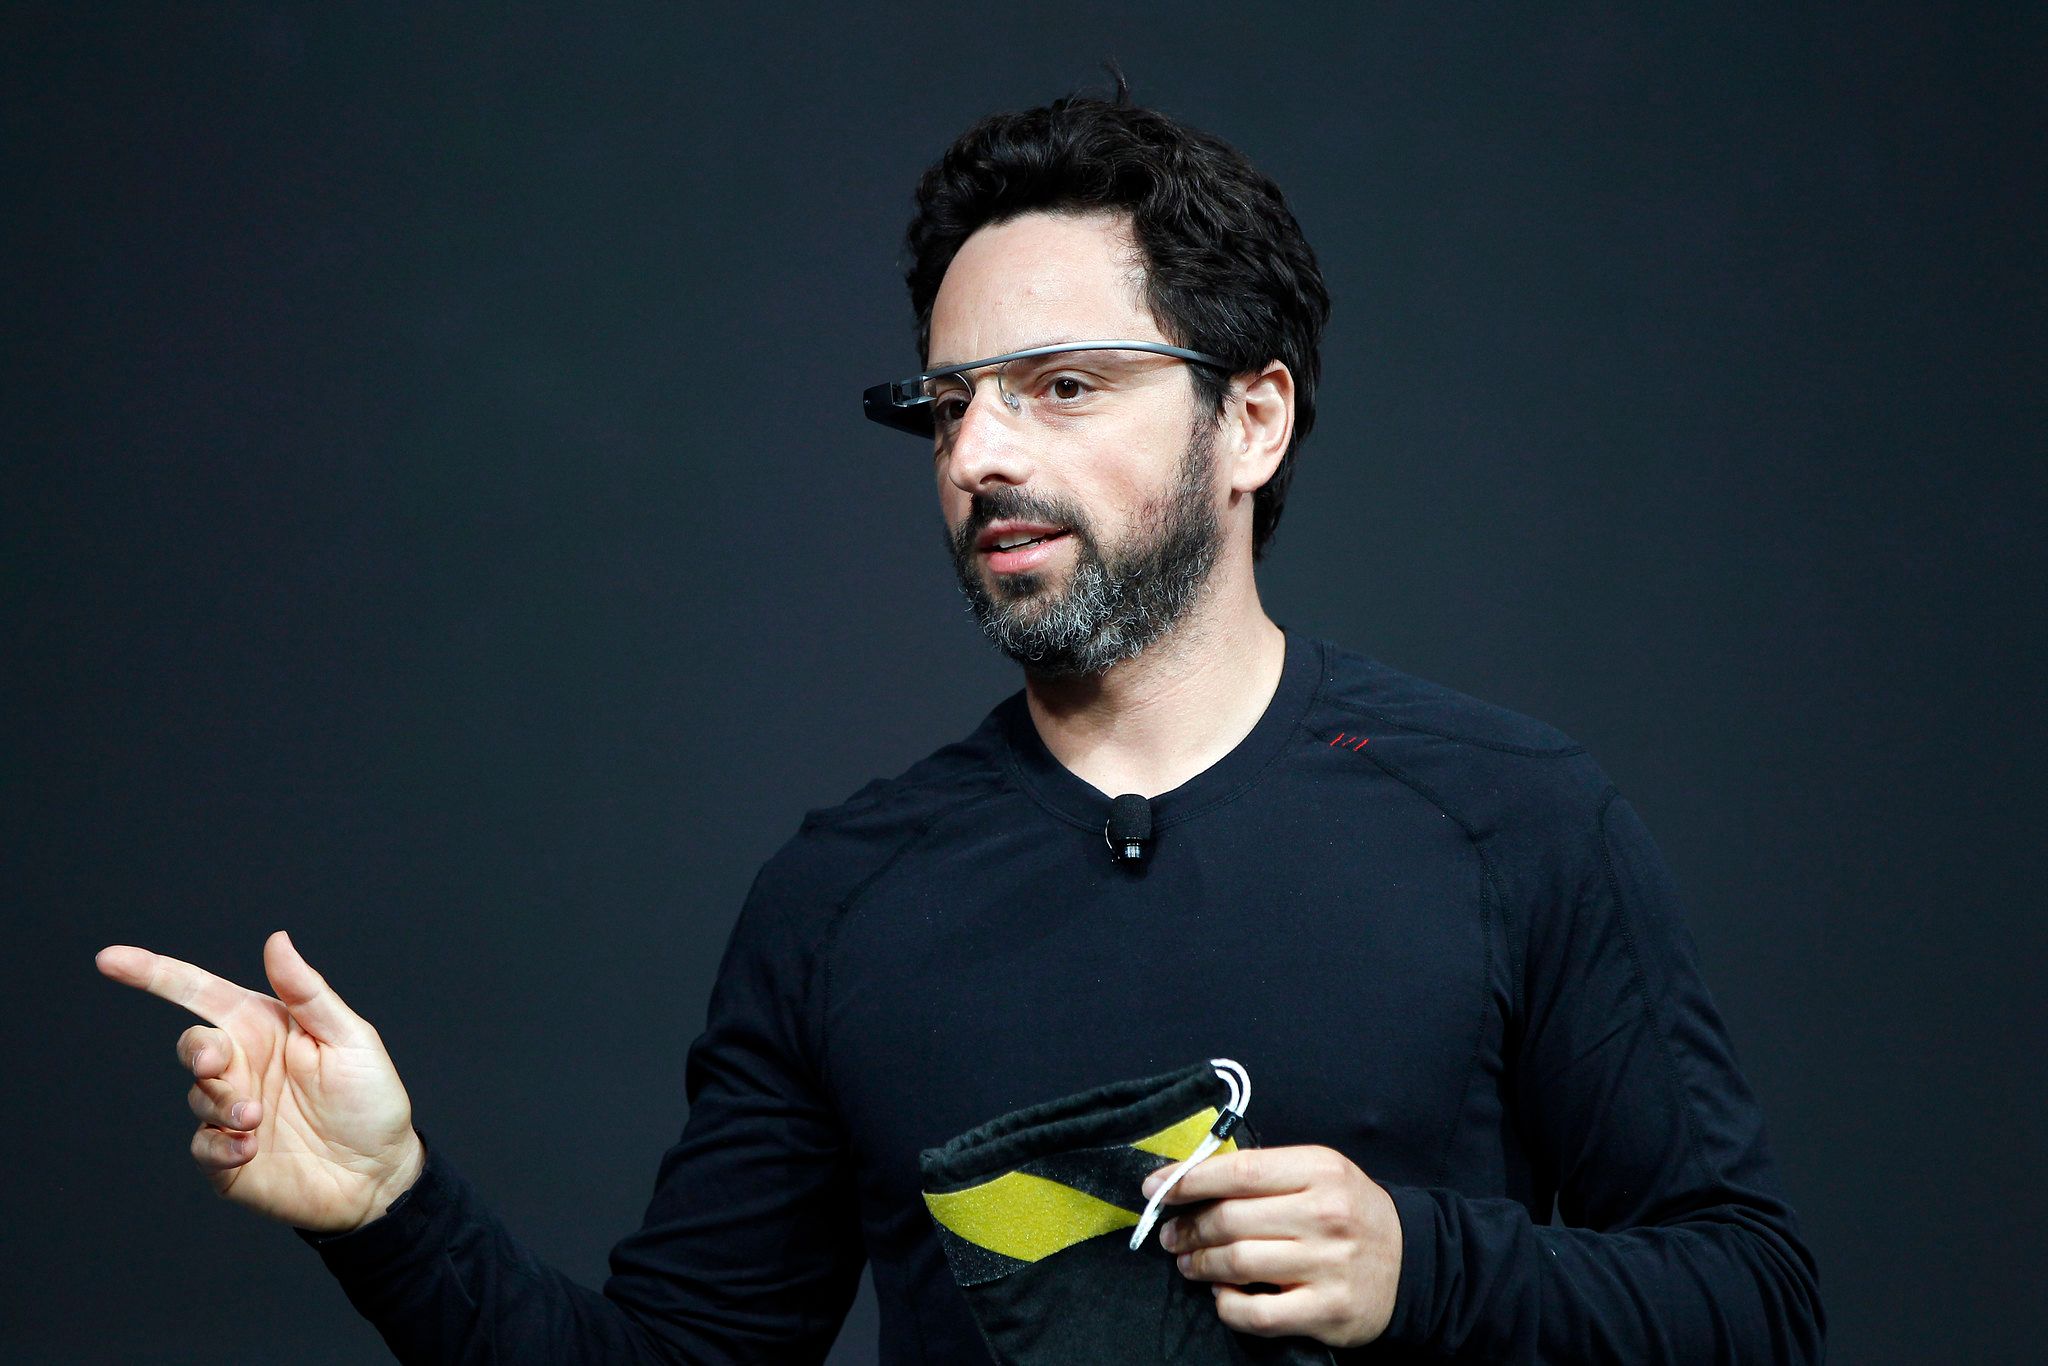 A Picture Of Sergey Brin